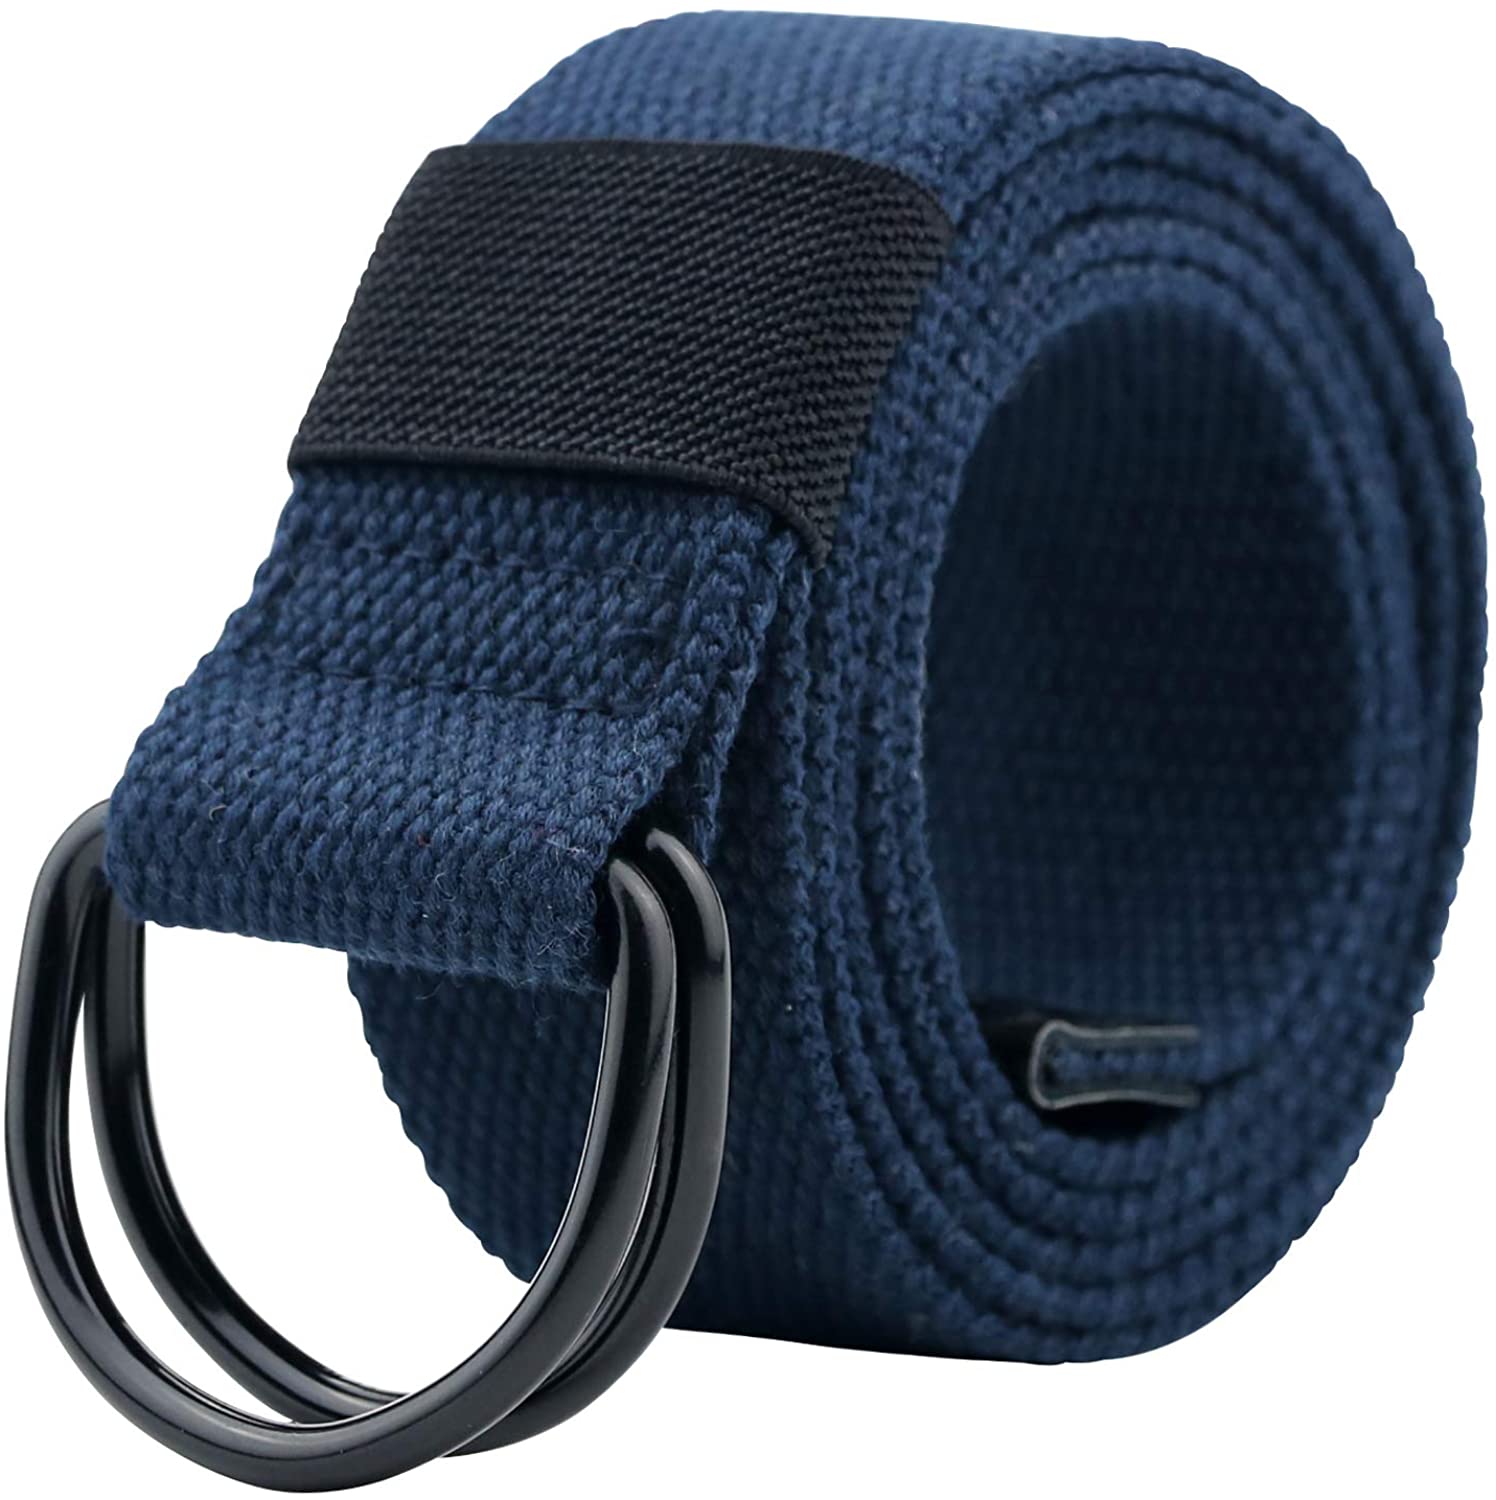 Canvas Belt, Web Belt for Men/Women with Metal Double D Ring Buckle 1 1/2  Wide